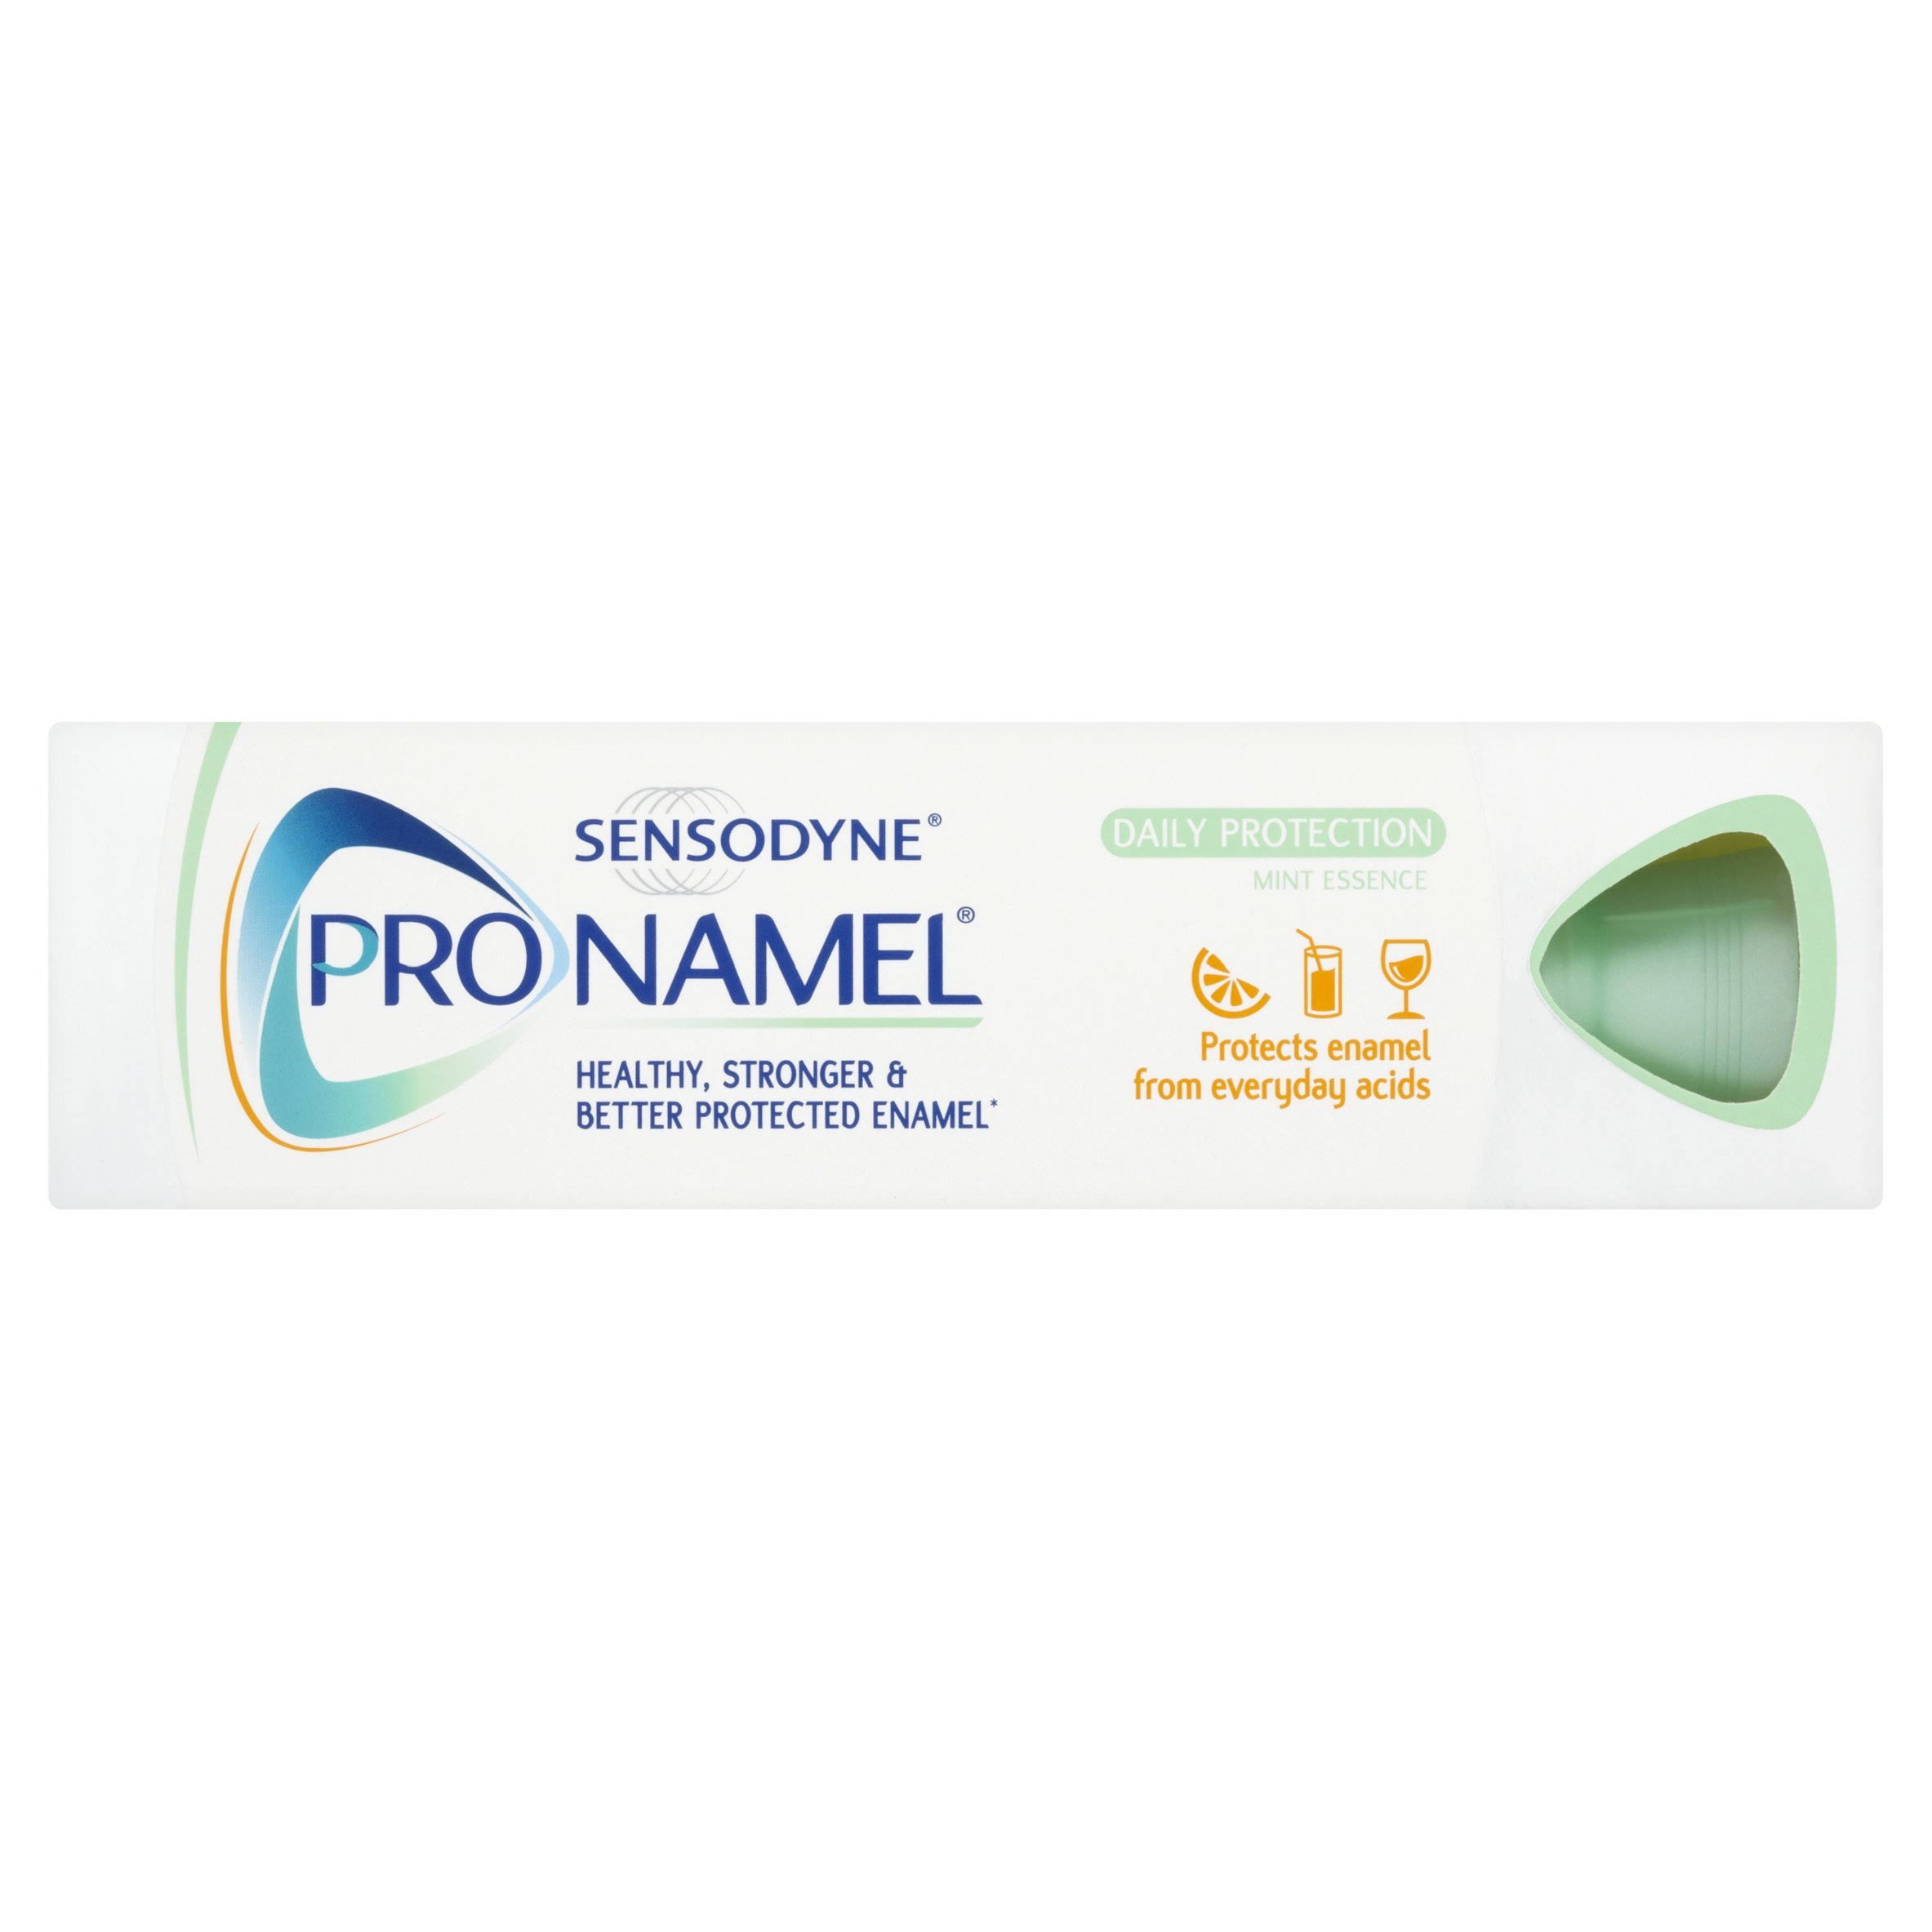 Sensodyne Pronamel Daily Protection Toothpaste - 75ml